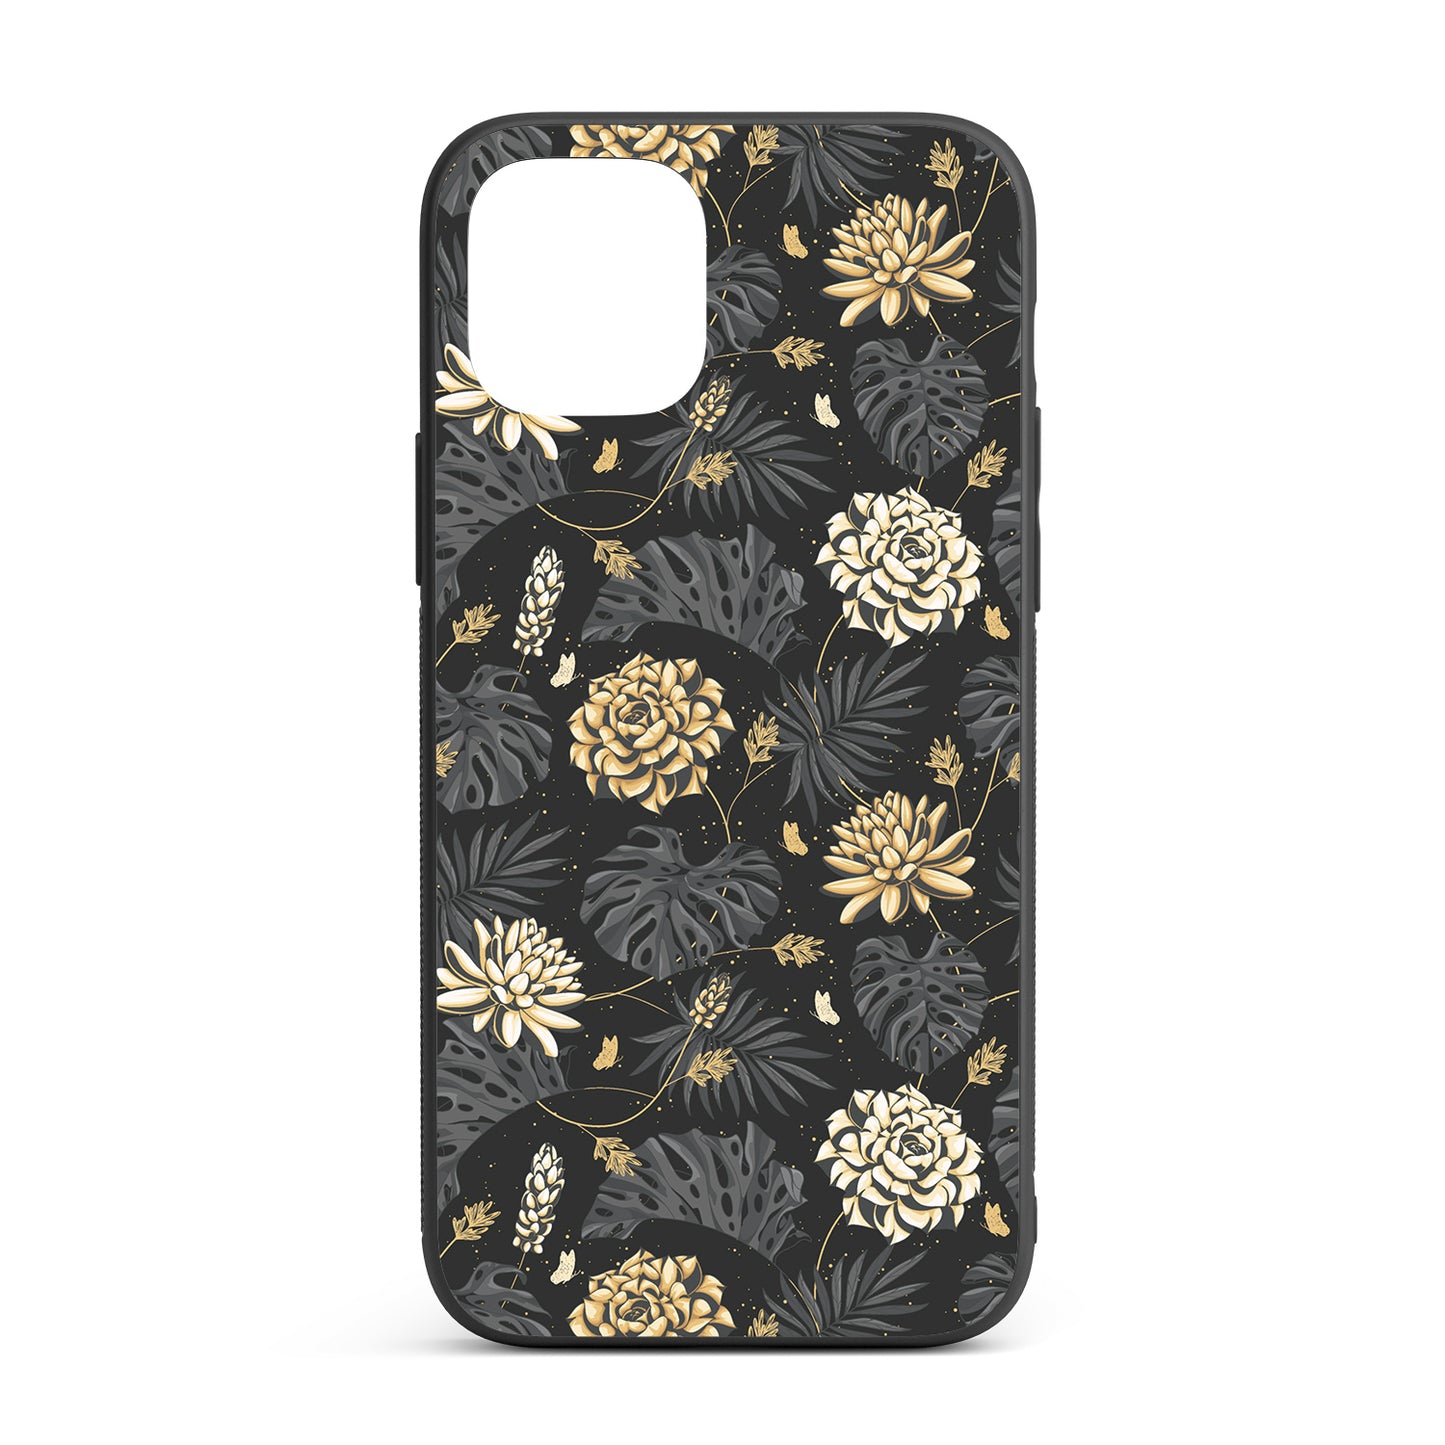 Golden Bloom iPhone glass case